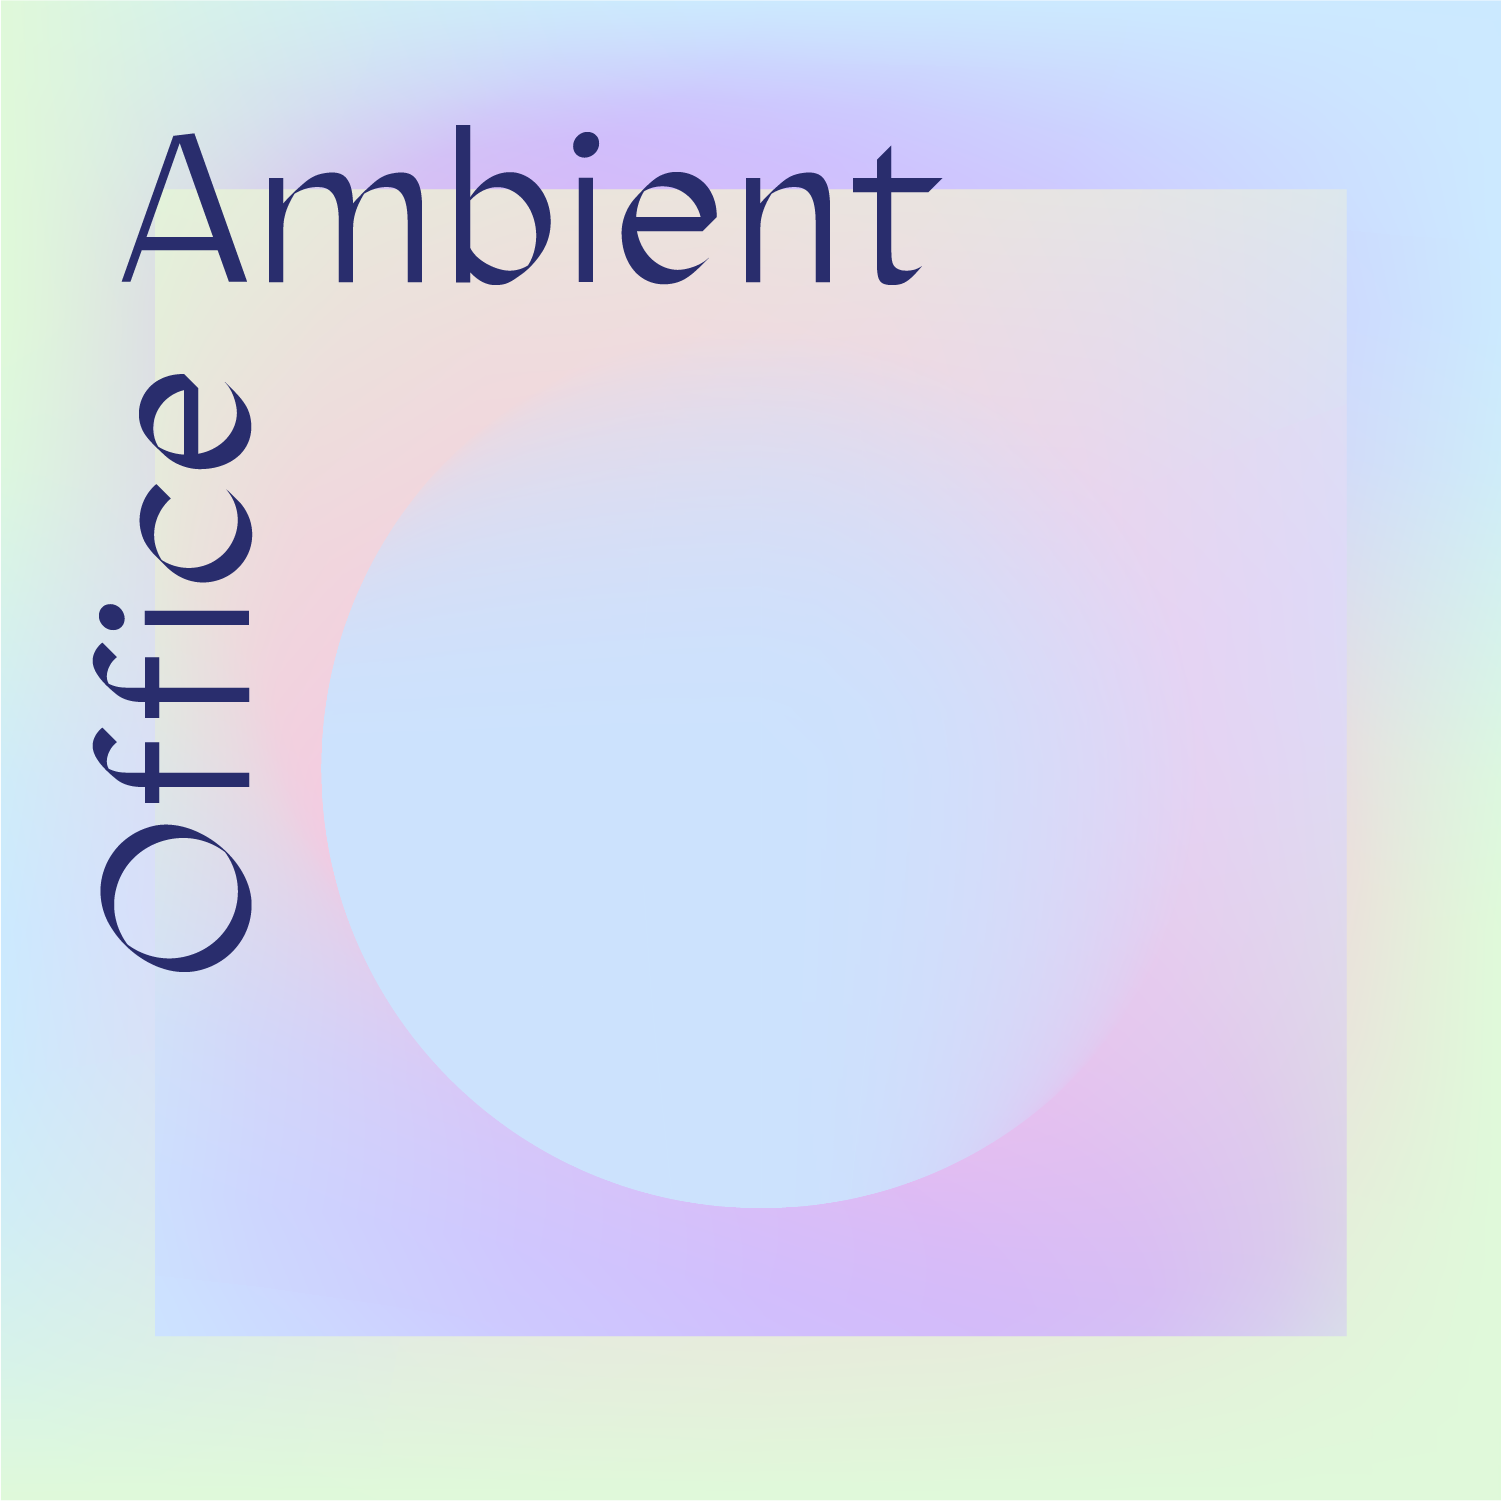 073119_Q_Spotify_Ambient_Playlist_vv-copy